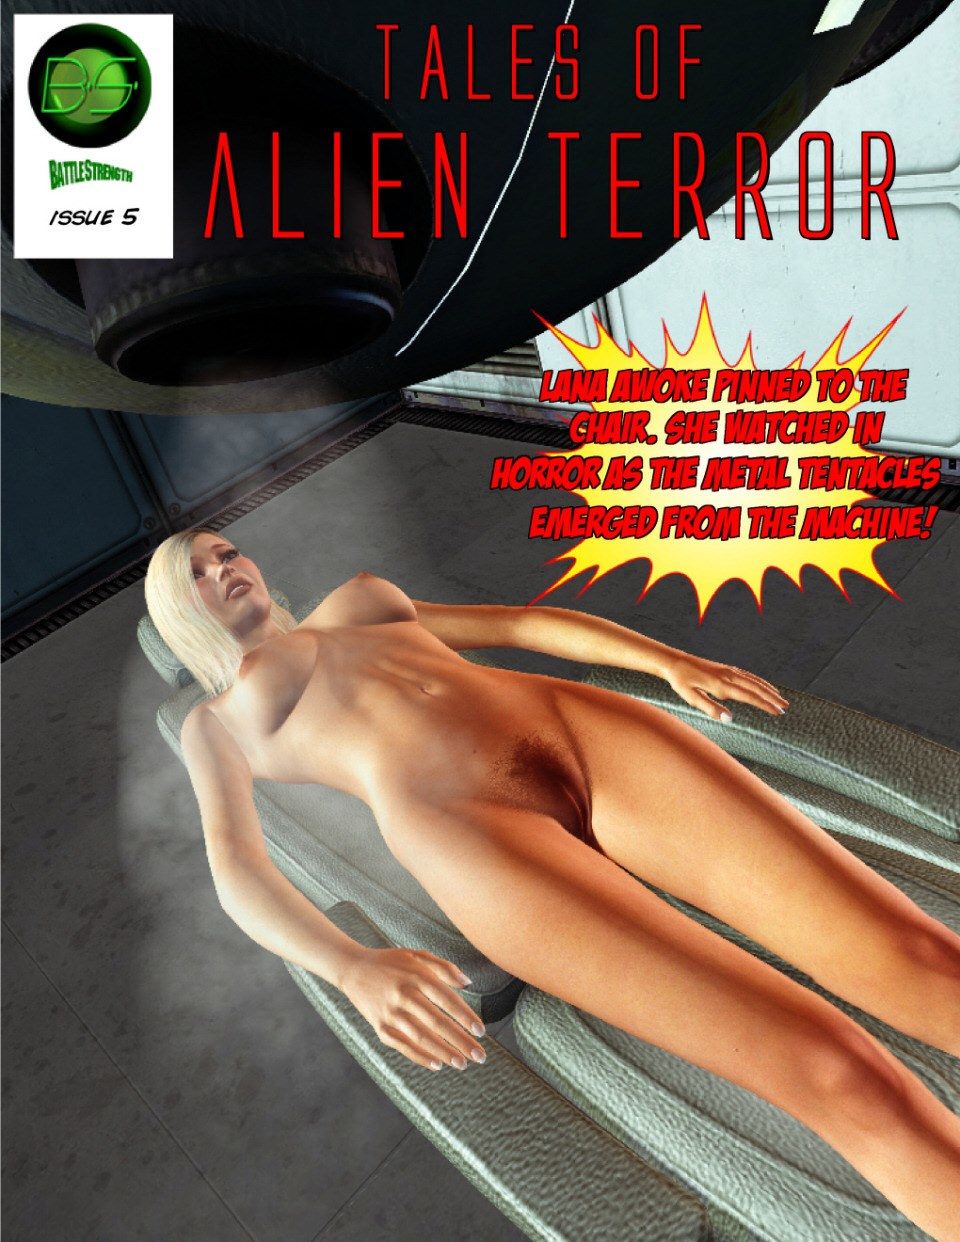 Tales of Alien Terror - Issue 5 - BattleStrength page 1